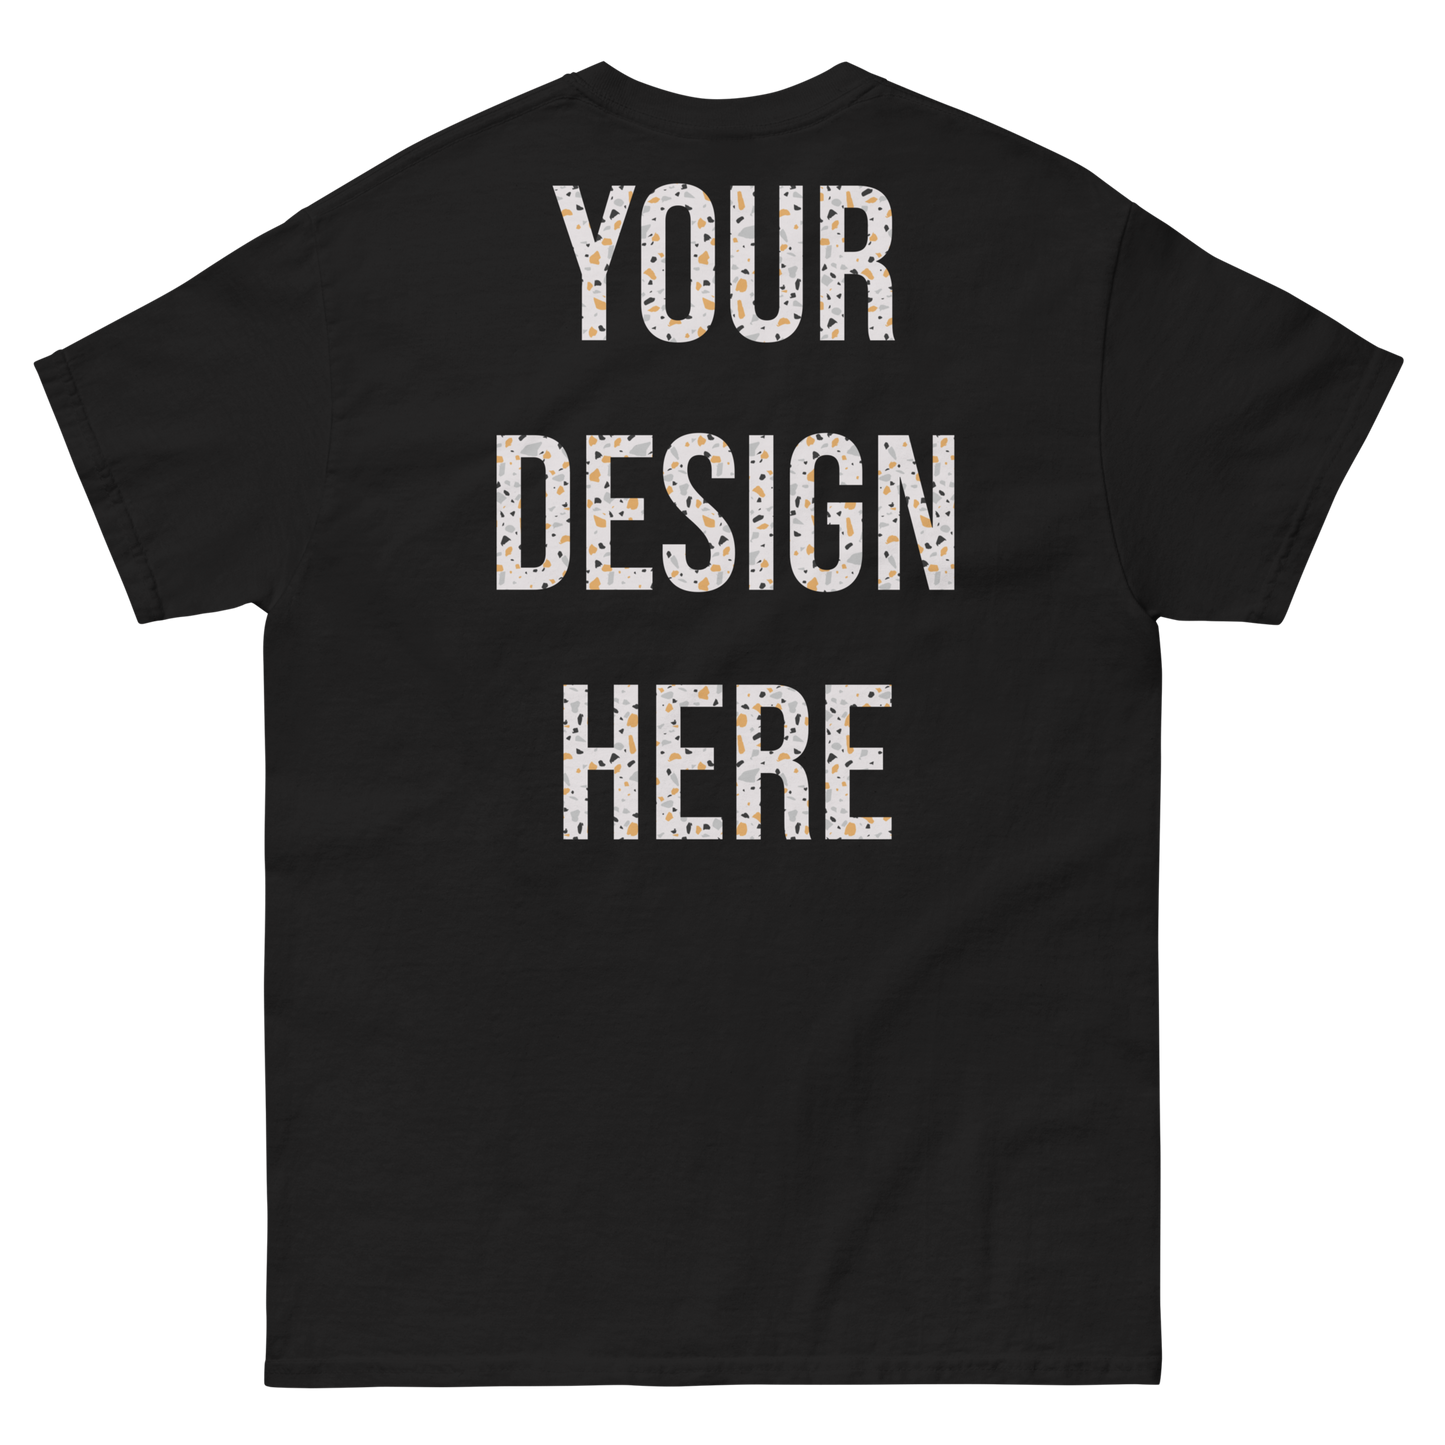 Custom T-Shirt Builder - Design Your Own Shirt Front & Back